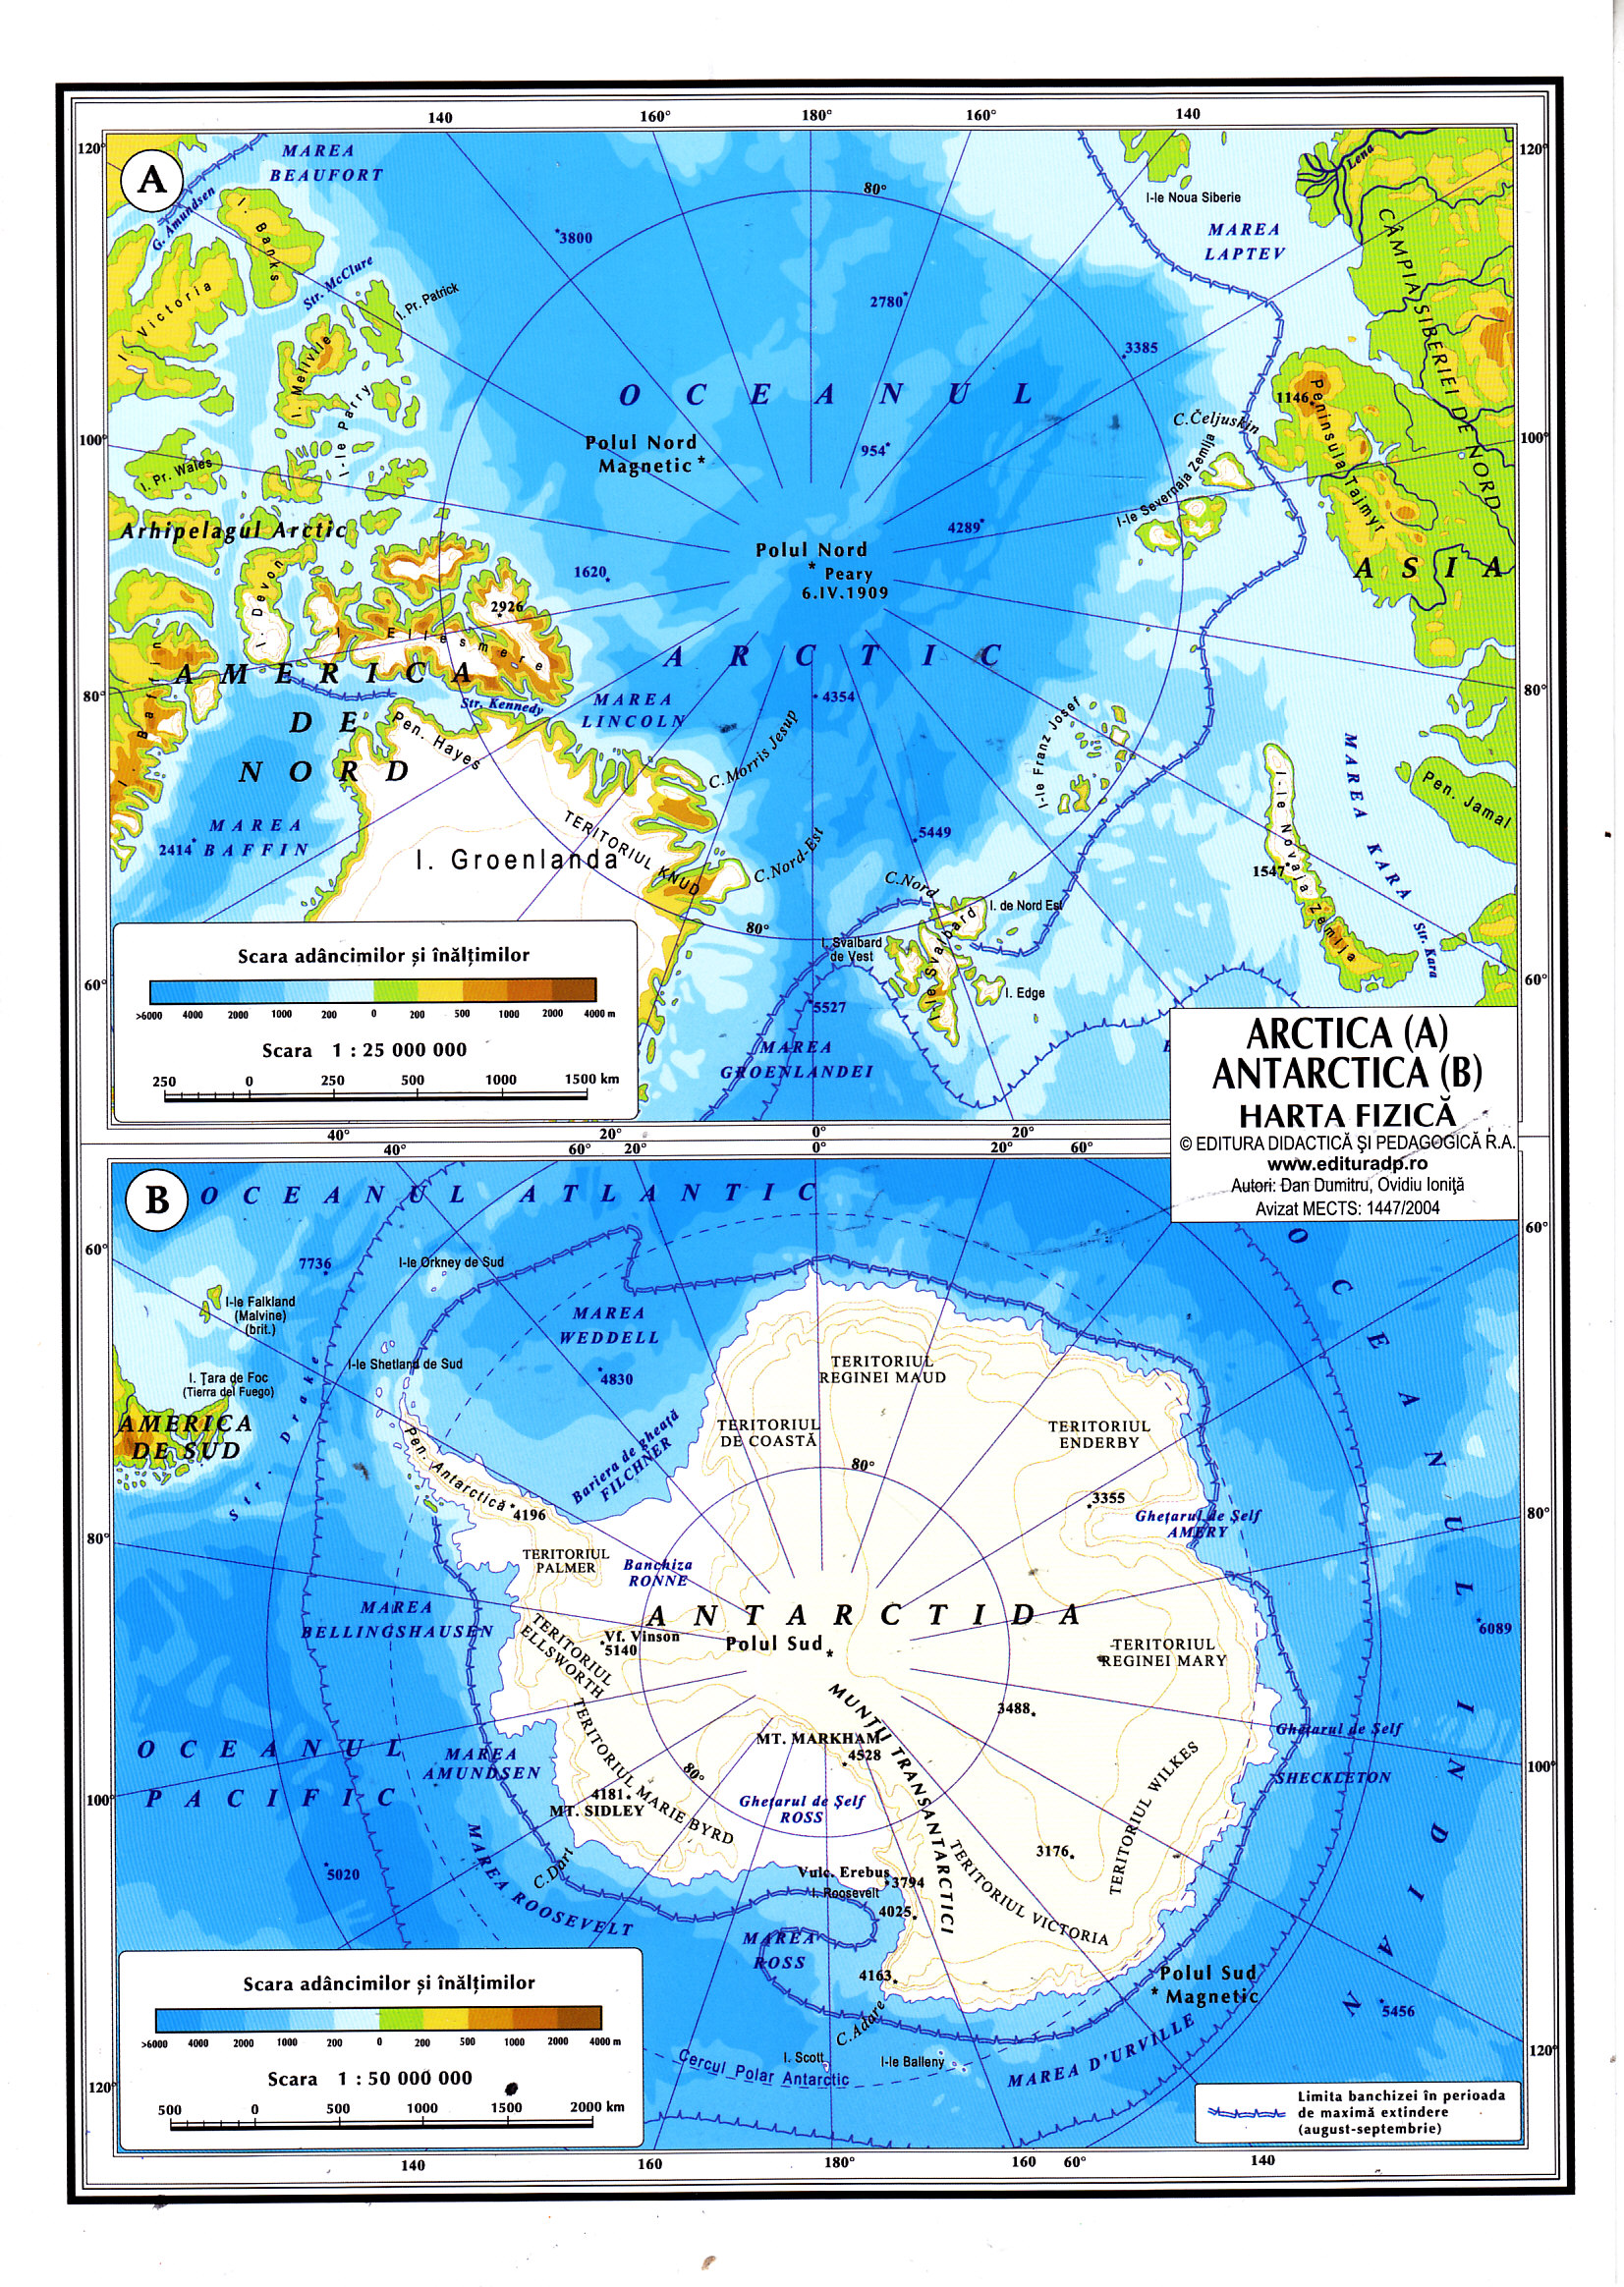 Harta Australia si Oceania (Fizica si Politica) + Arctica si Antarctica (Fizica)